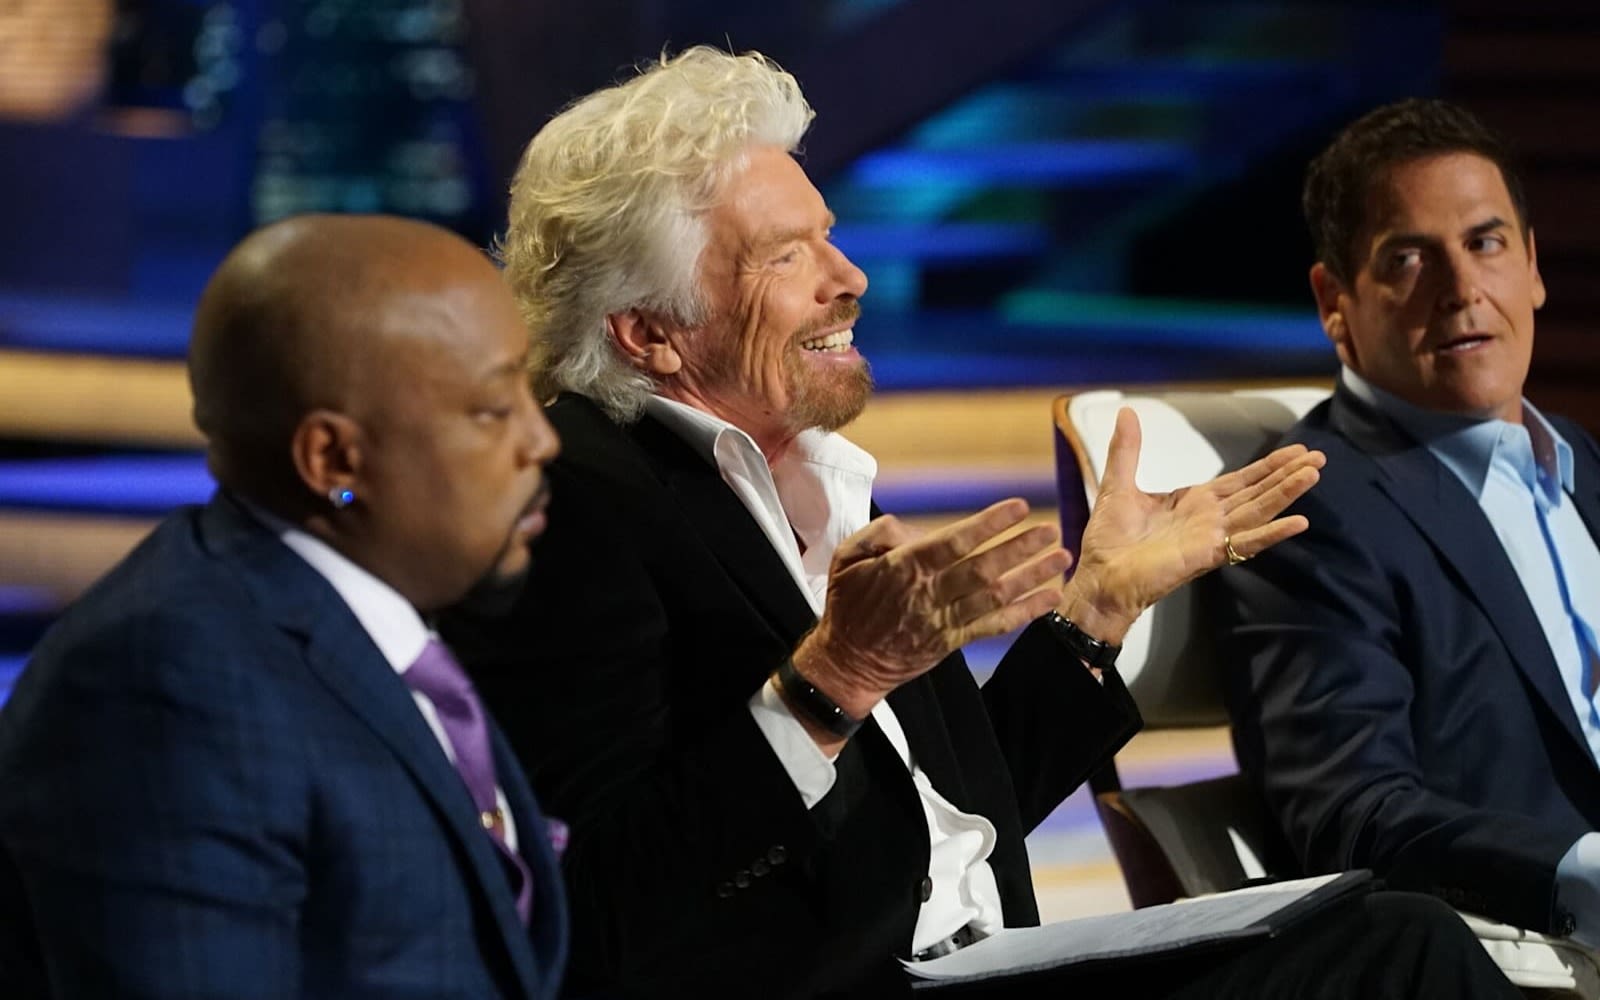 Richard Branson on the Shark Tank judging panel sitting between Mark Cuban and Daymond John